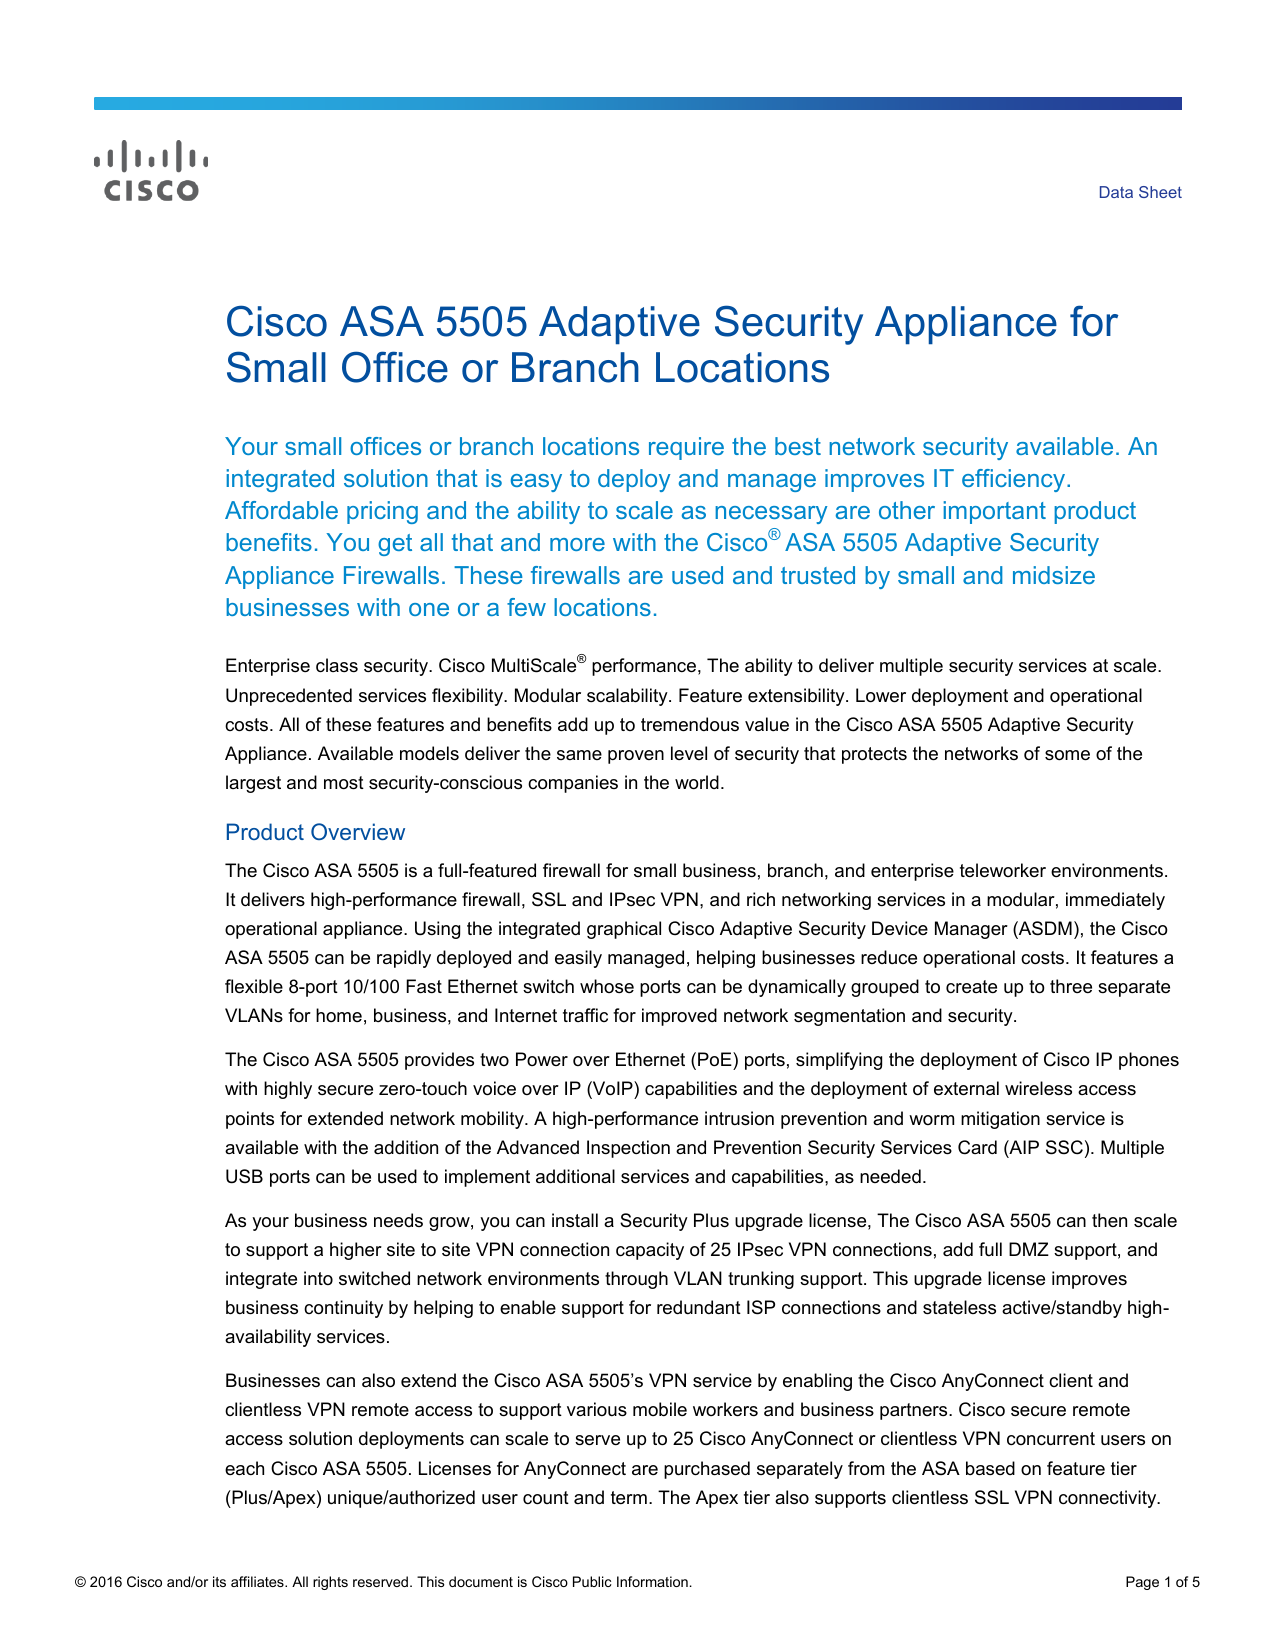 Cisco asa 5505 firmware download flash tool